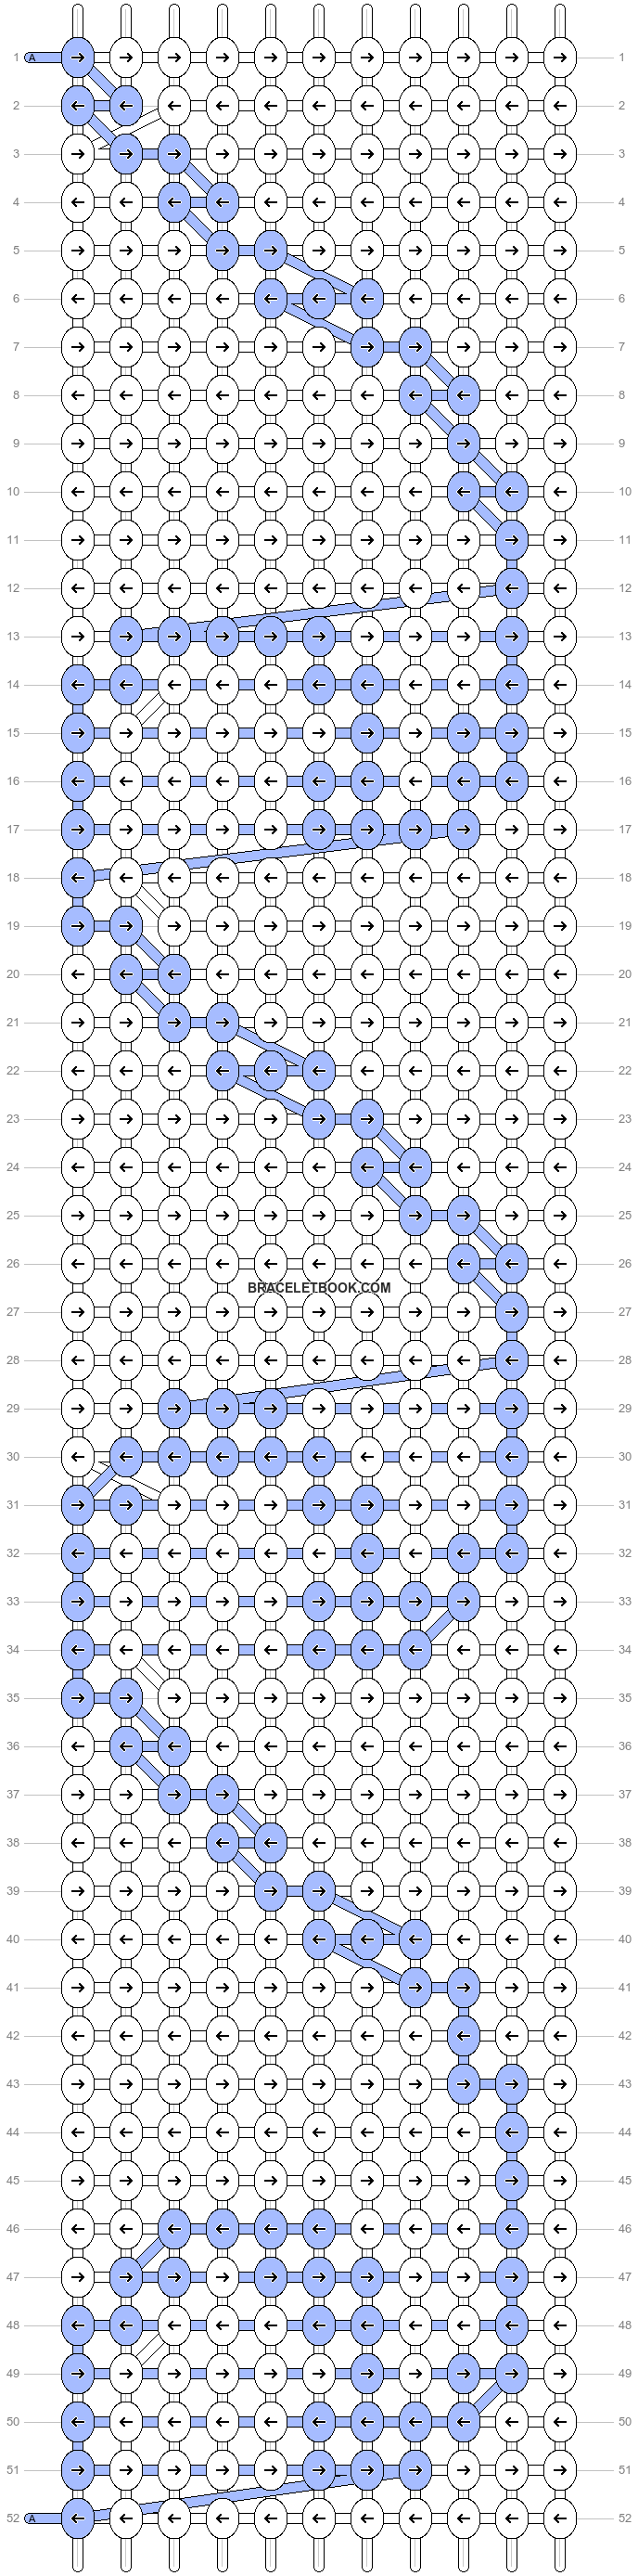 Alpha pattern #45382 variation #66708 pattern